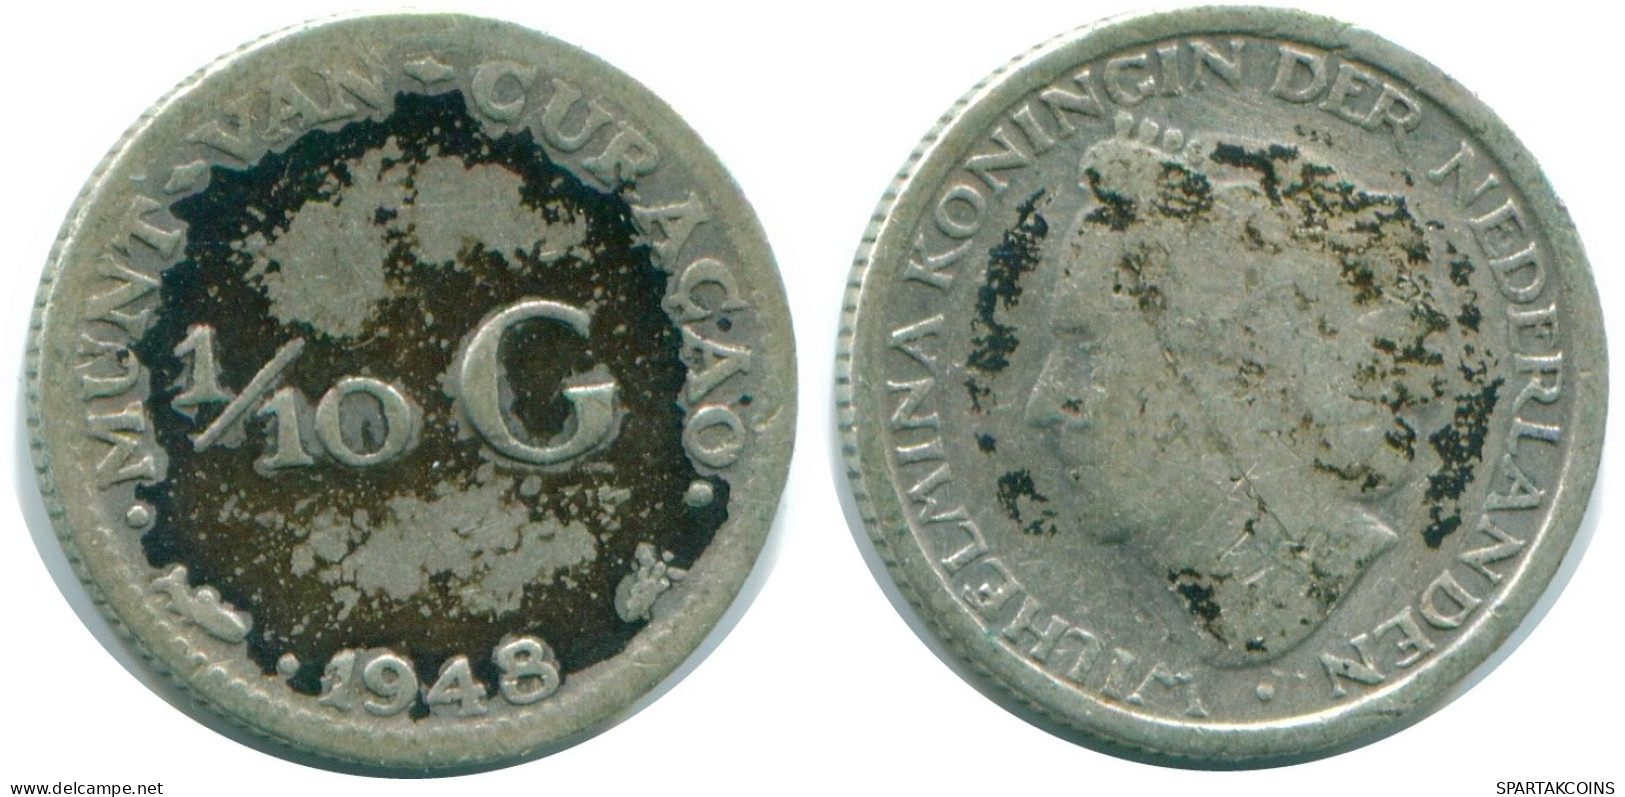 1/10 GULDEN 1948 CURACAO Netherlands SILVER Colonial Coin #NL12025.3.U.A - Curaçao